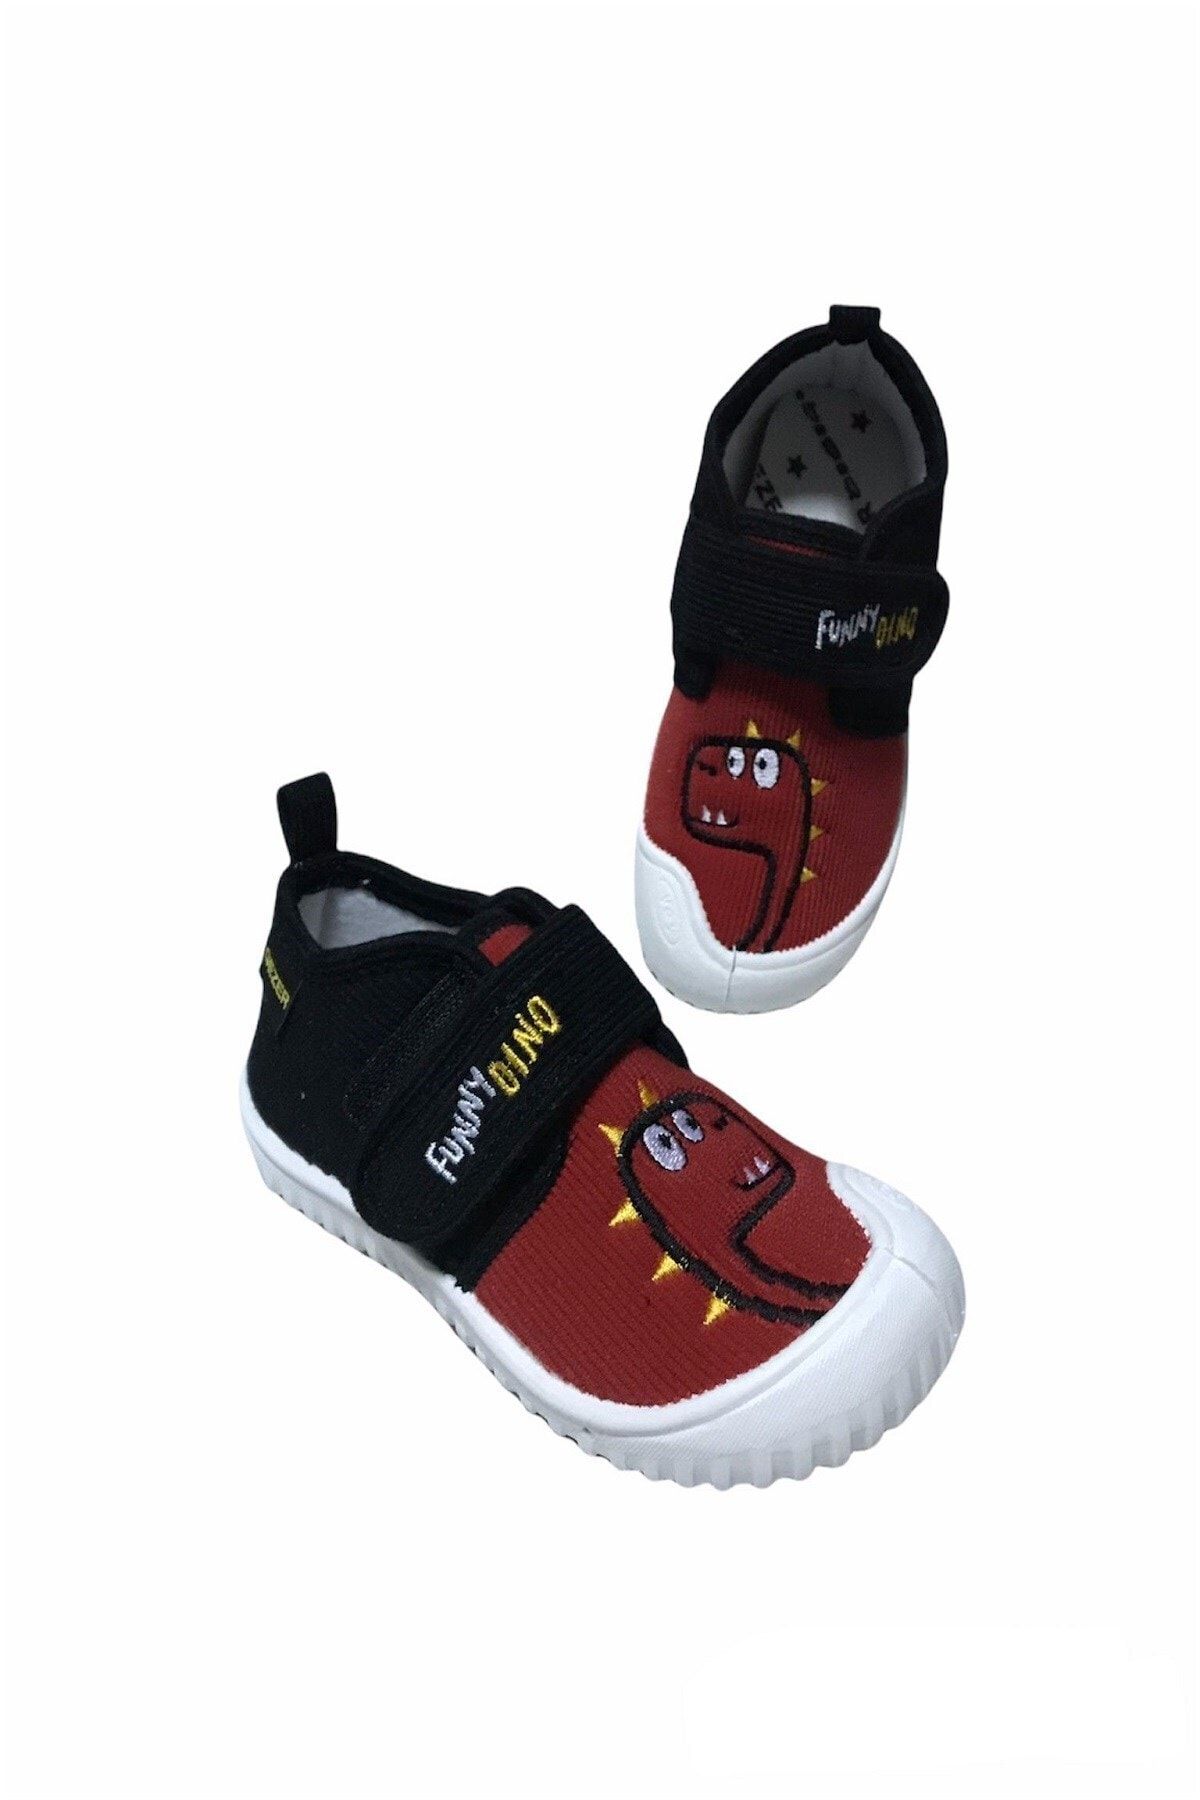 Buy ToeZone® Black Dinosaur Shoe - 10 Infant | School shoes | Tu